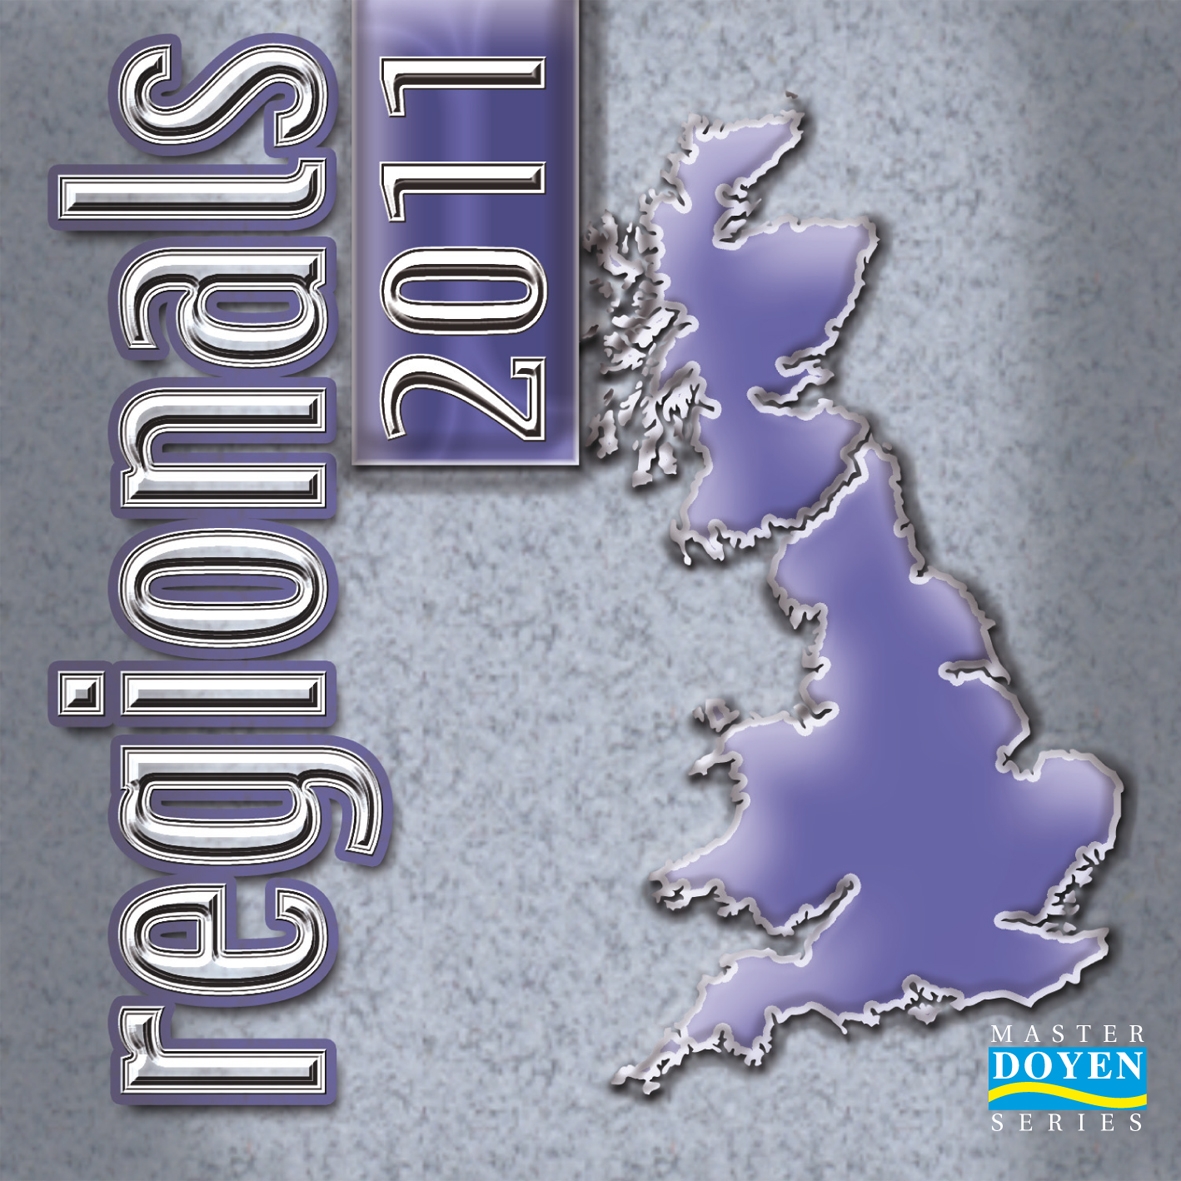 Regionals 2011 - Download